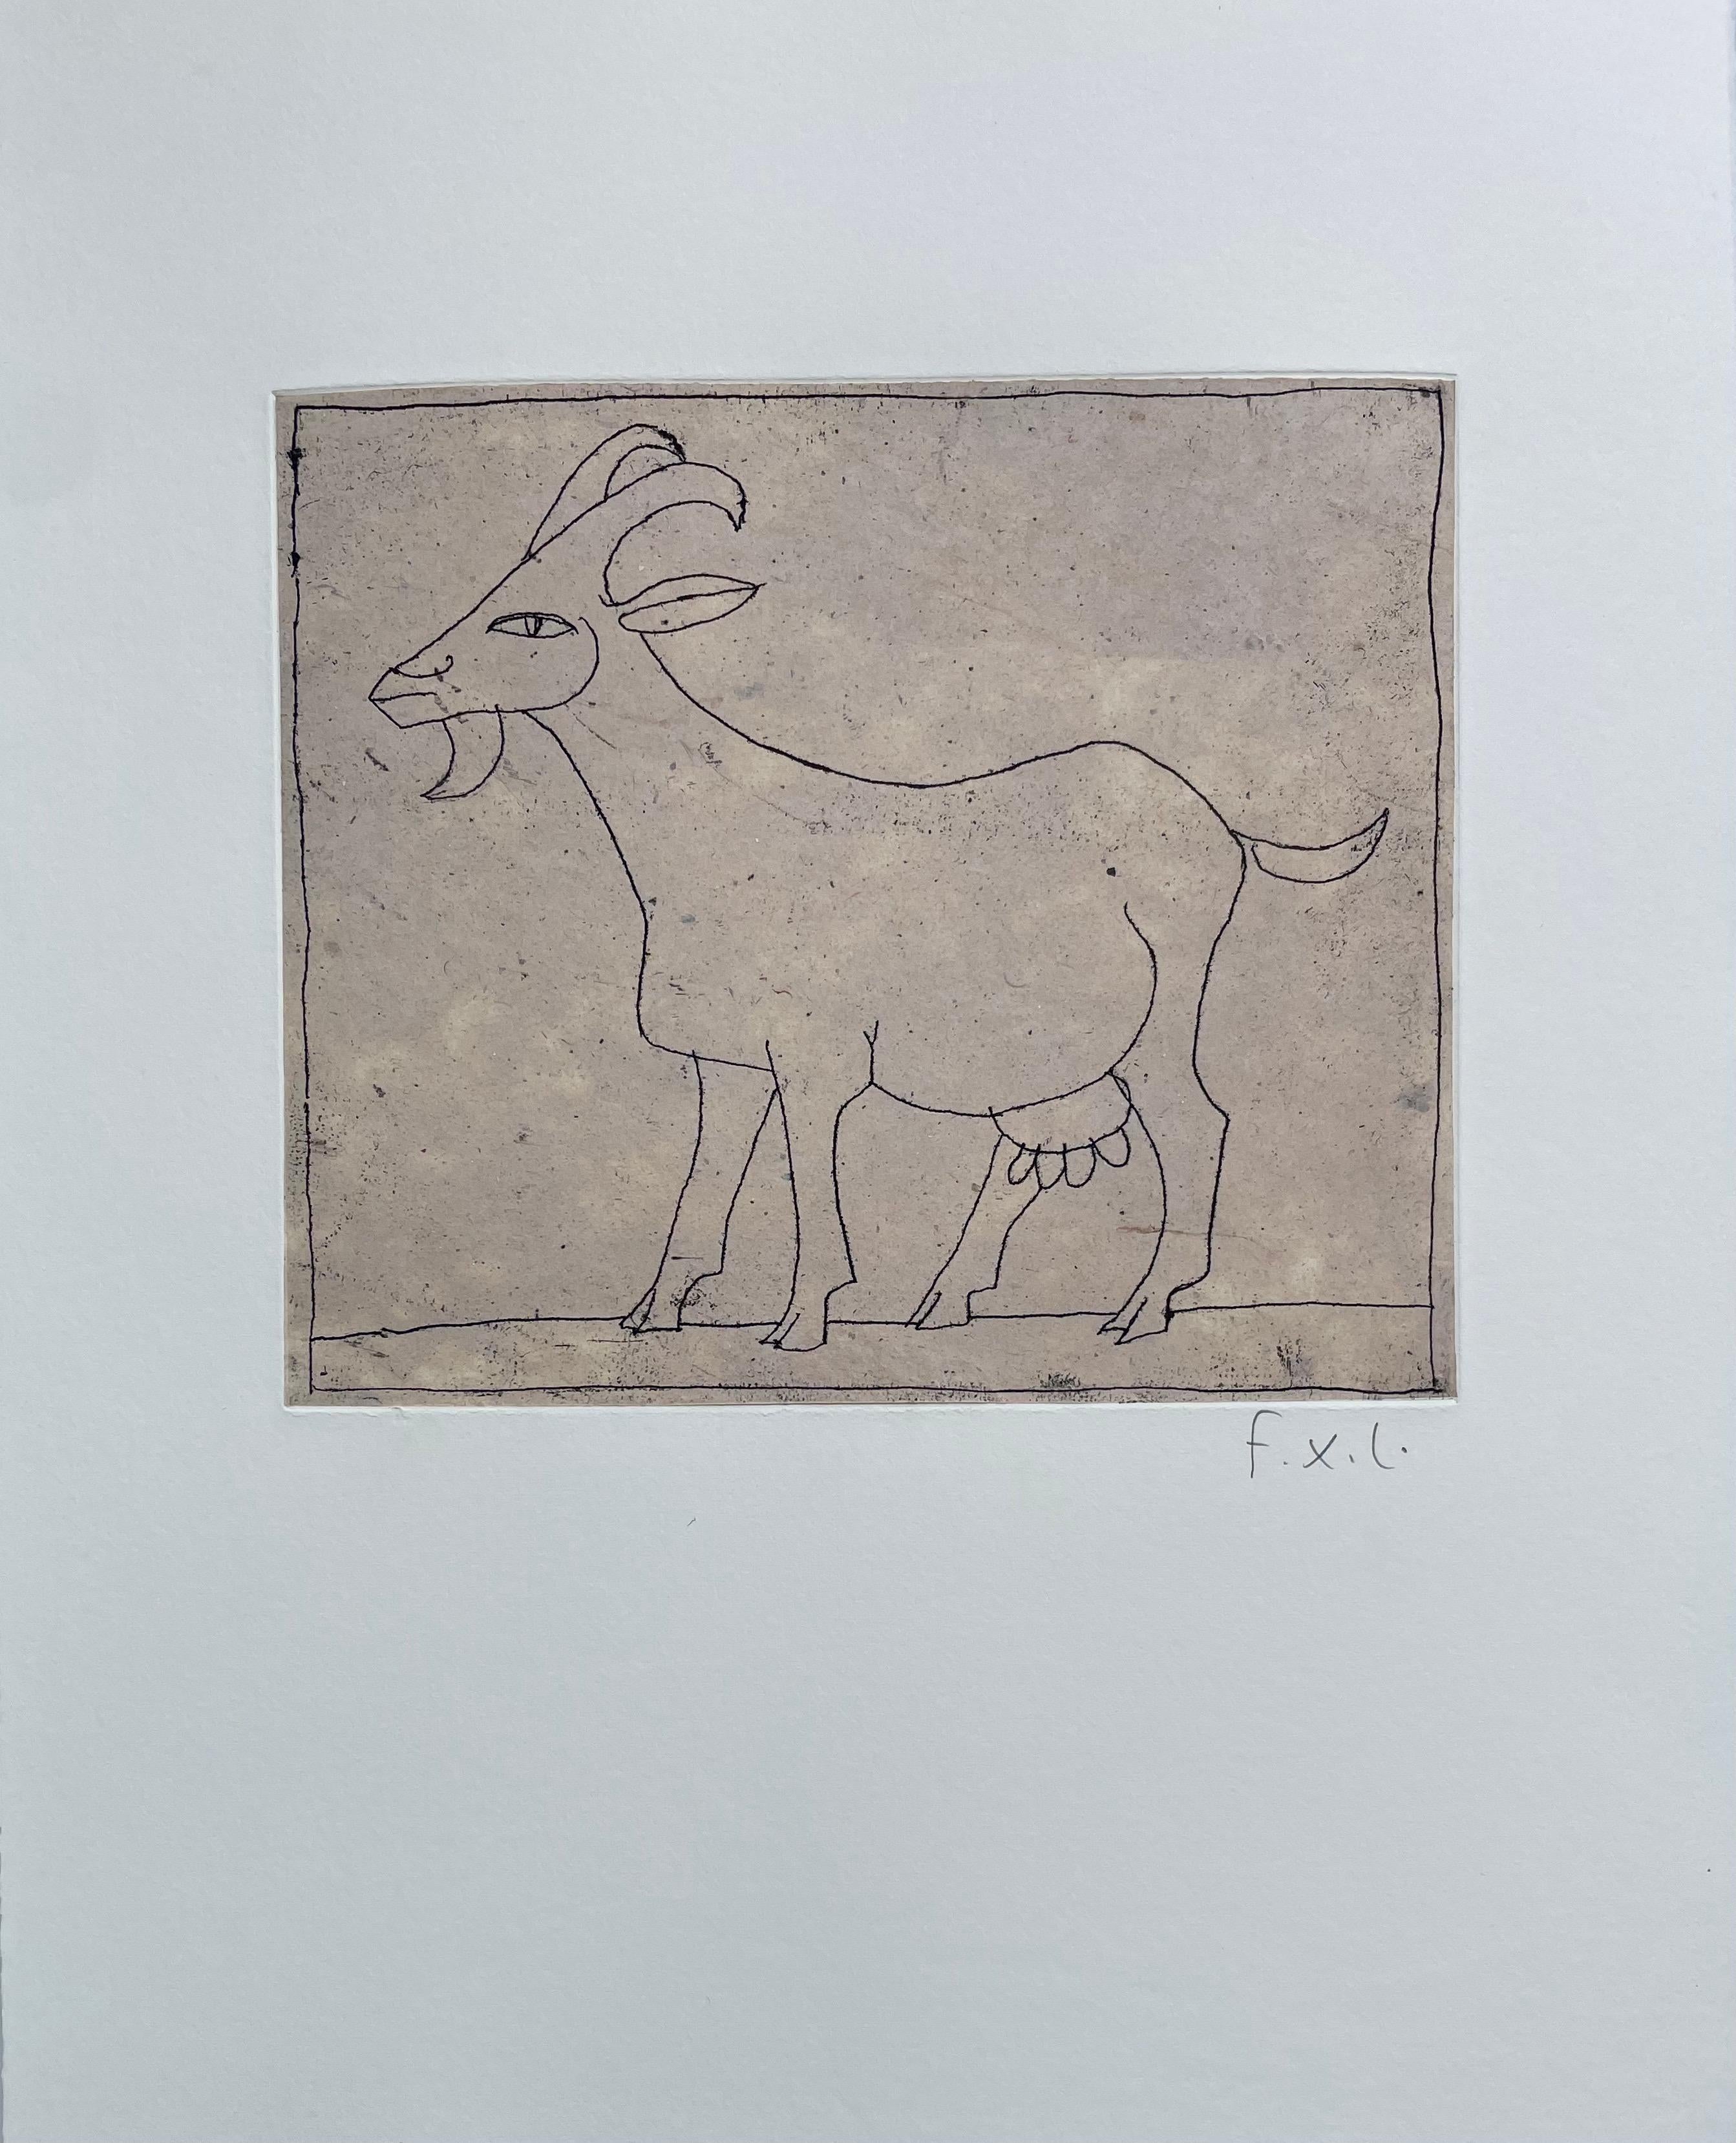 François-Xavier Lalanne (1927-2008) La chèvre (the goat), 2004
Original print (etching on paper) hand signed in pencil by François Xavier Lalanne and untitled 